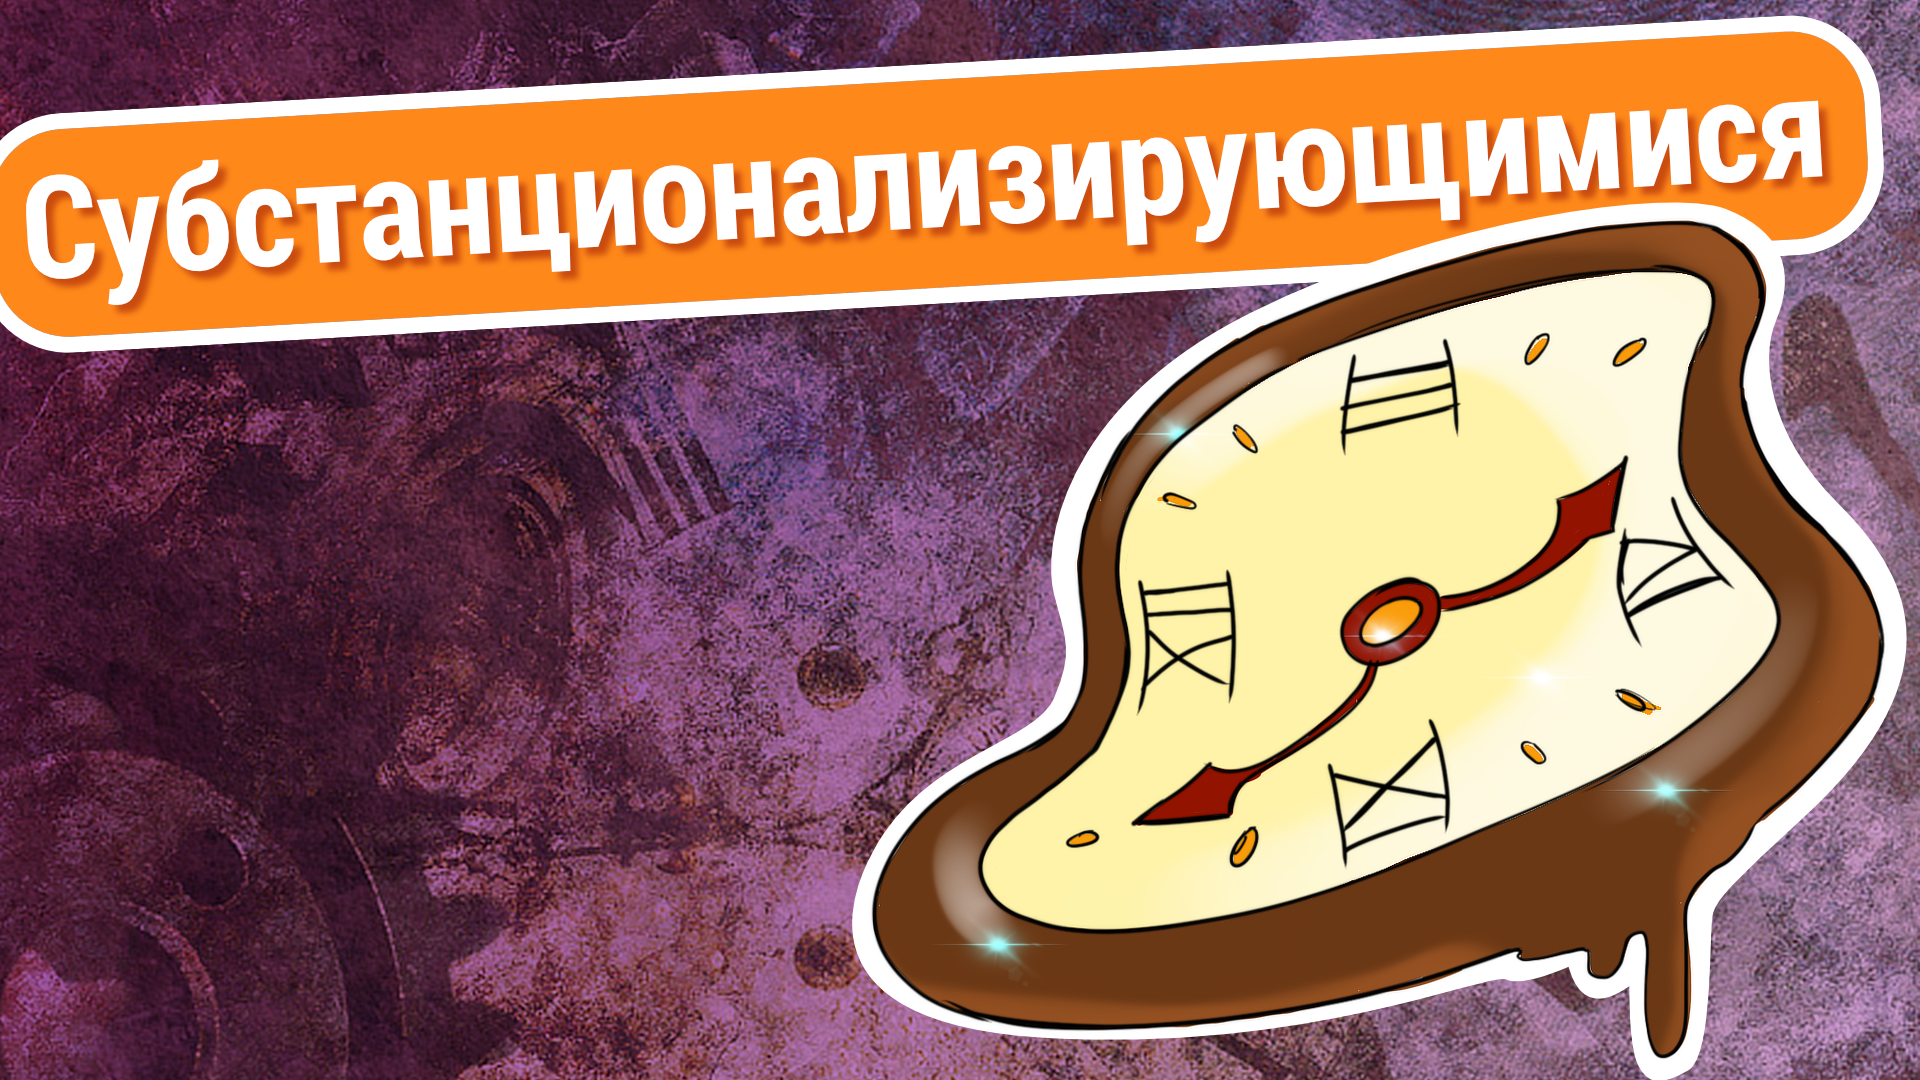 What is lolling in Russian? развалясь